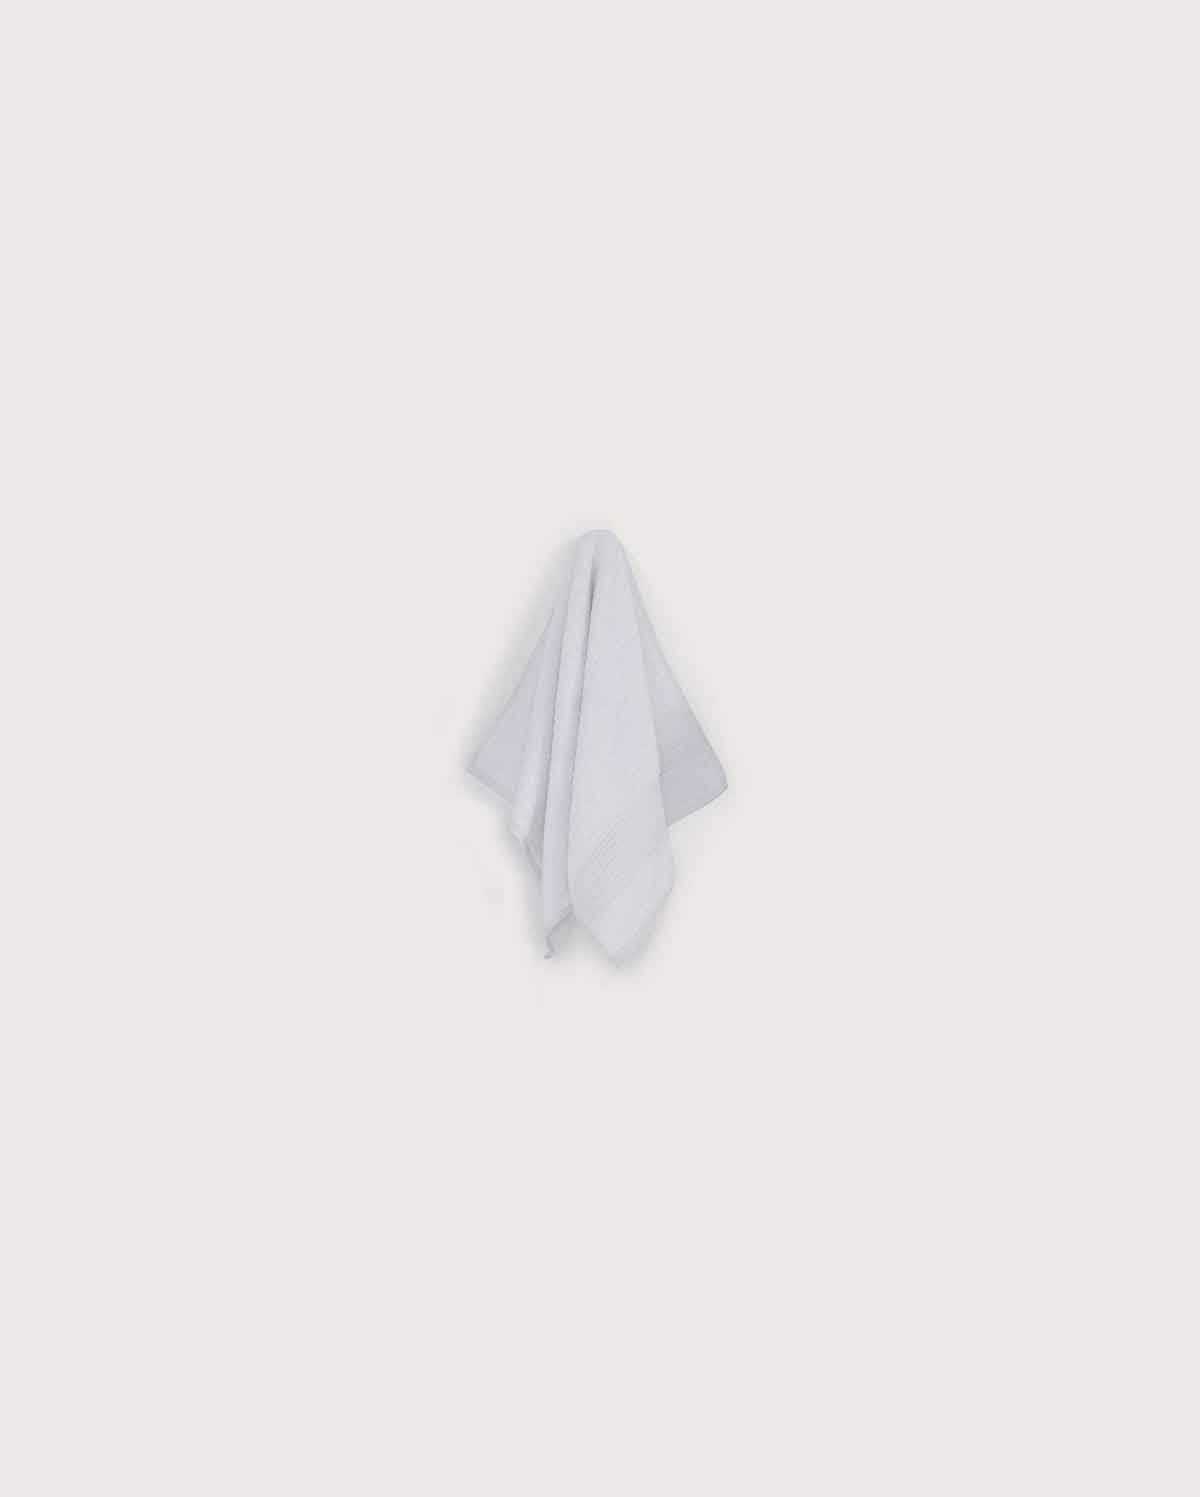 Cotton Plush Spa Towel Set - White (3 Towels)